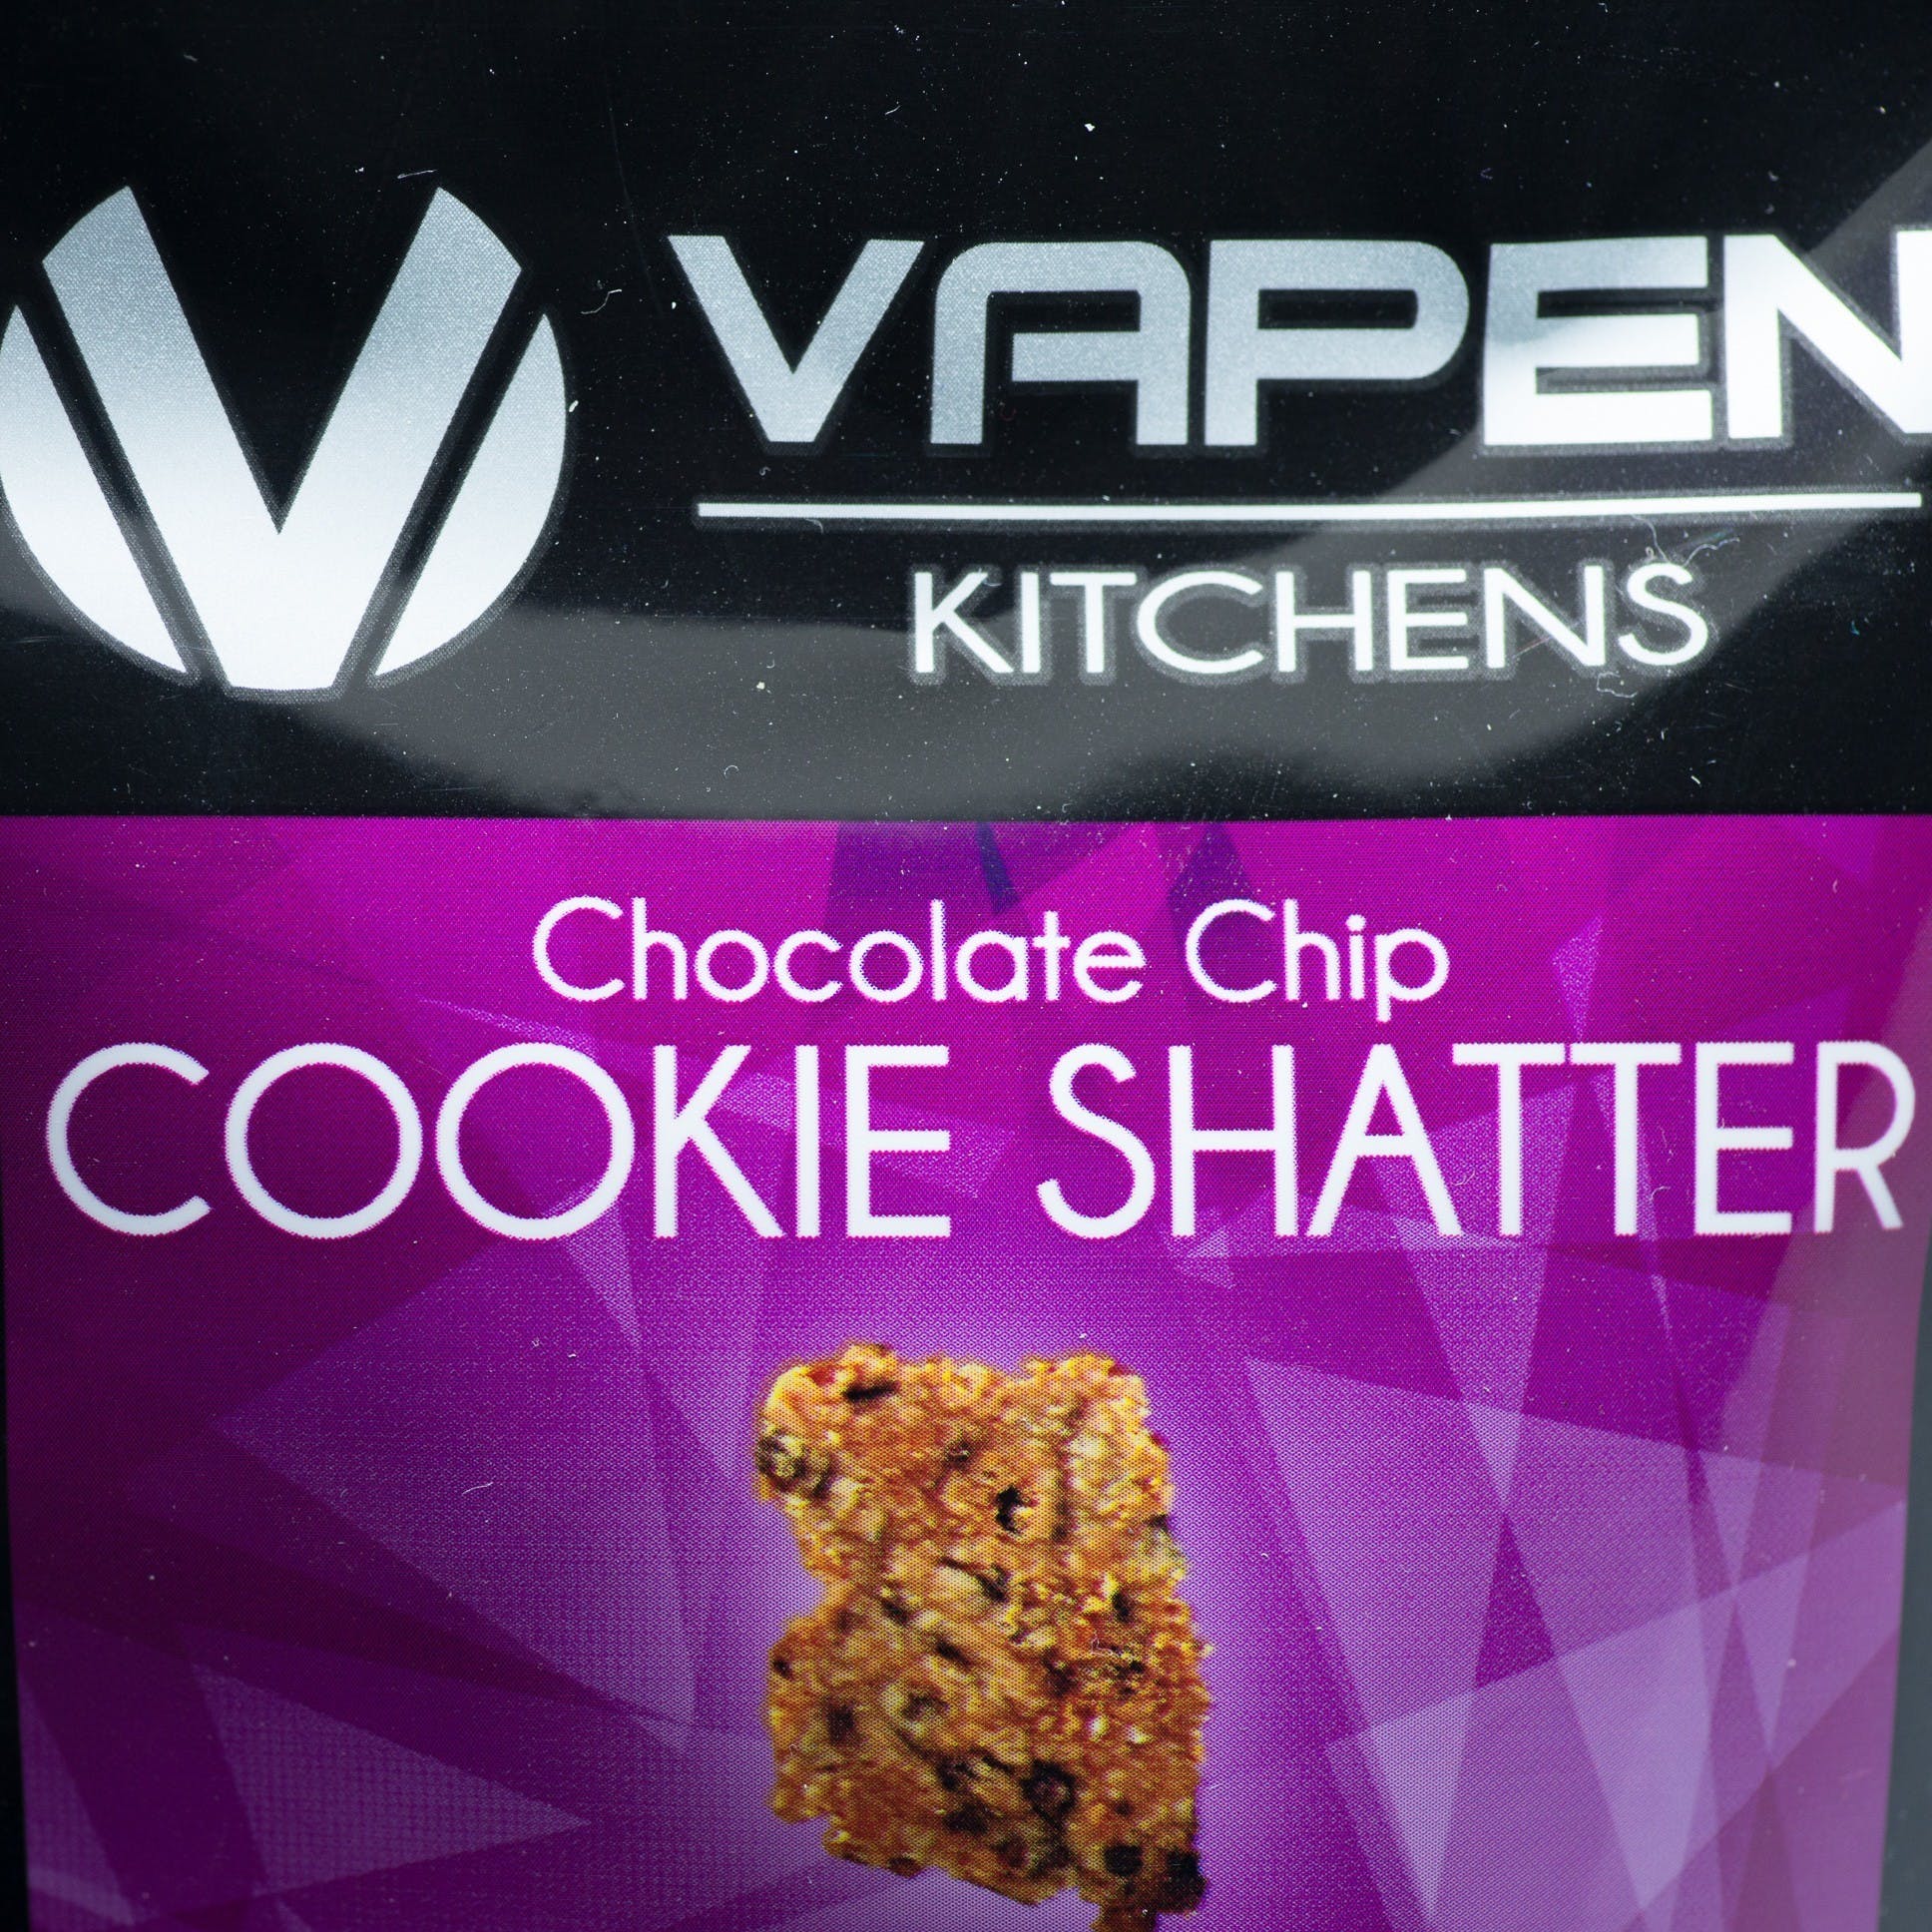 edible-vapen-kitchens-cookie-shatter-100mg-b1g50-25-all-vapen-no-additional-discounts